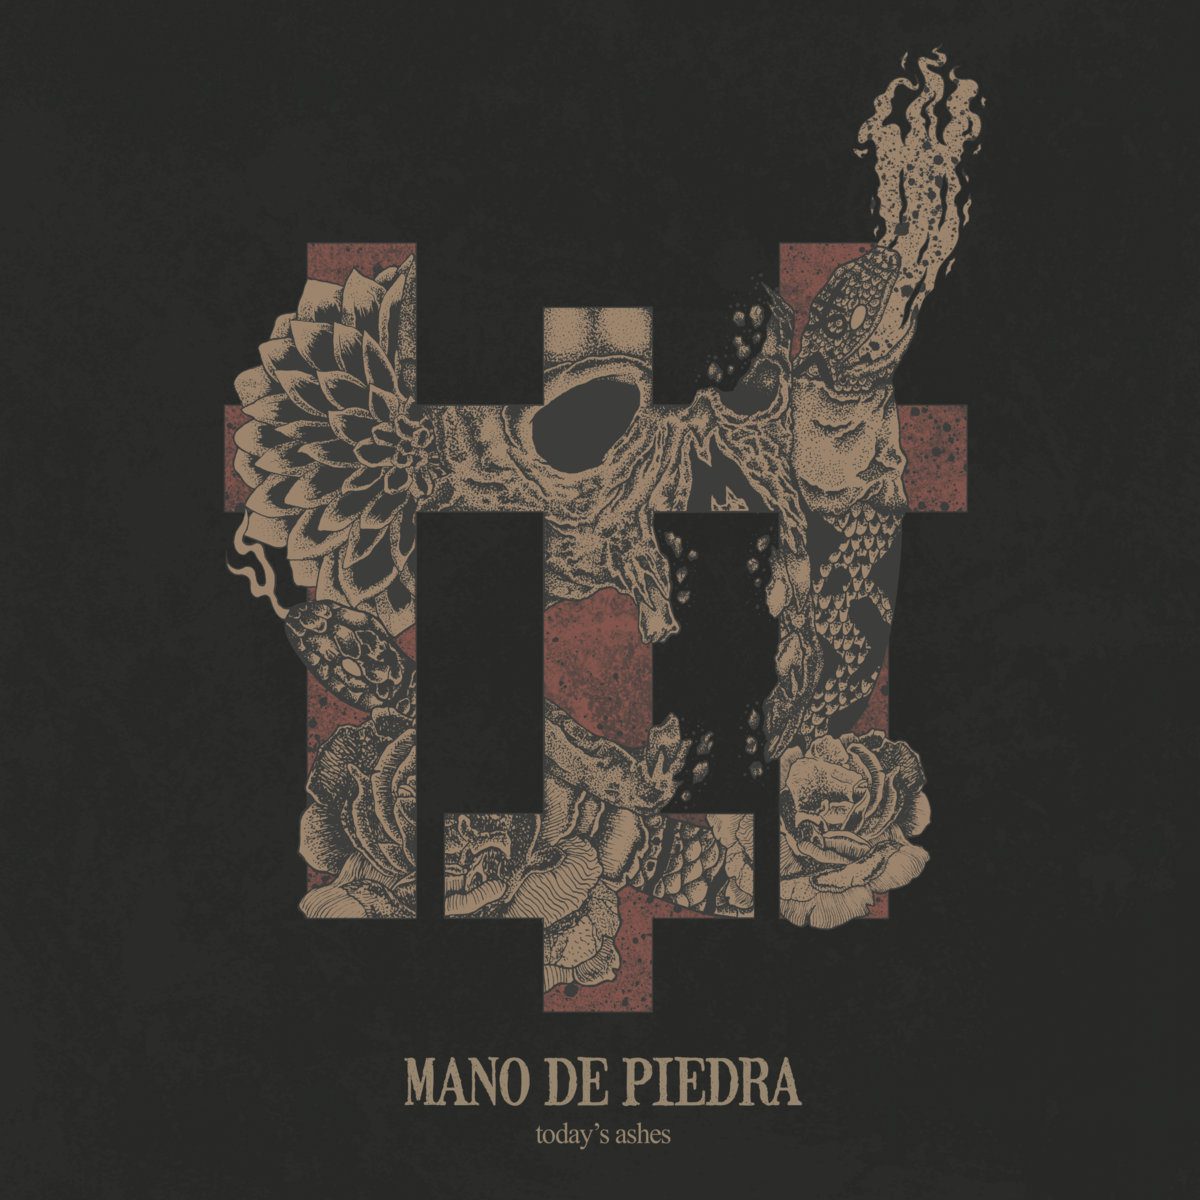 MANO DE PIEDRA – Today’s ashes